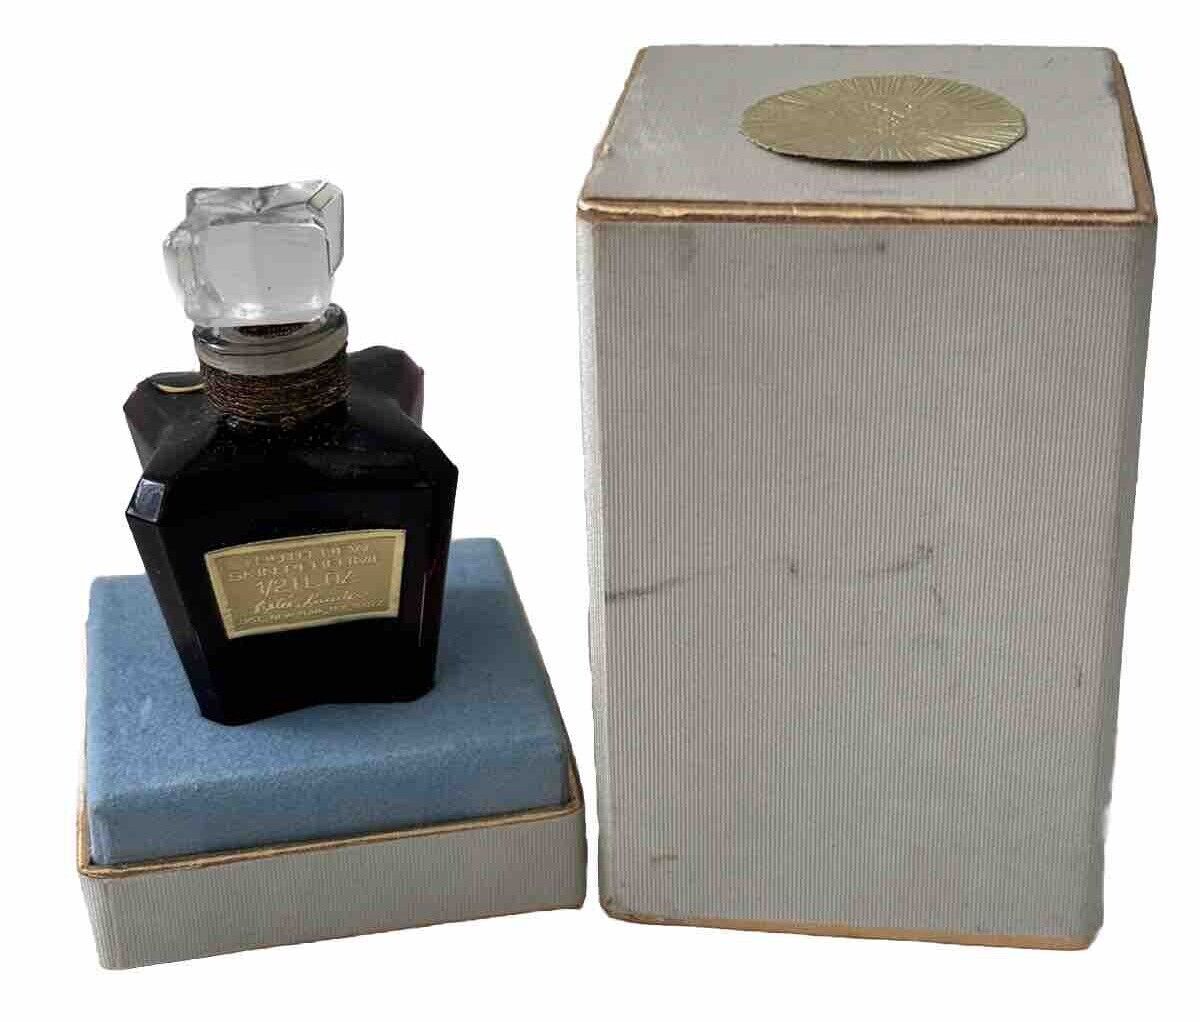 Estee lauder youth dew skin perfume, New,, Vintage, 1/2 fl oz Parfum Splash NIB